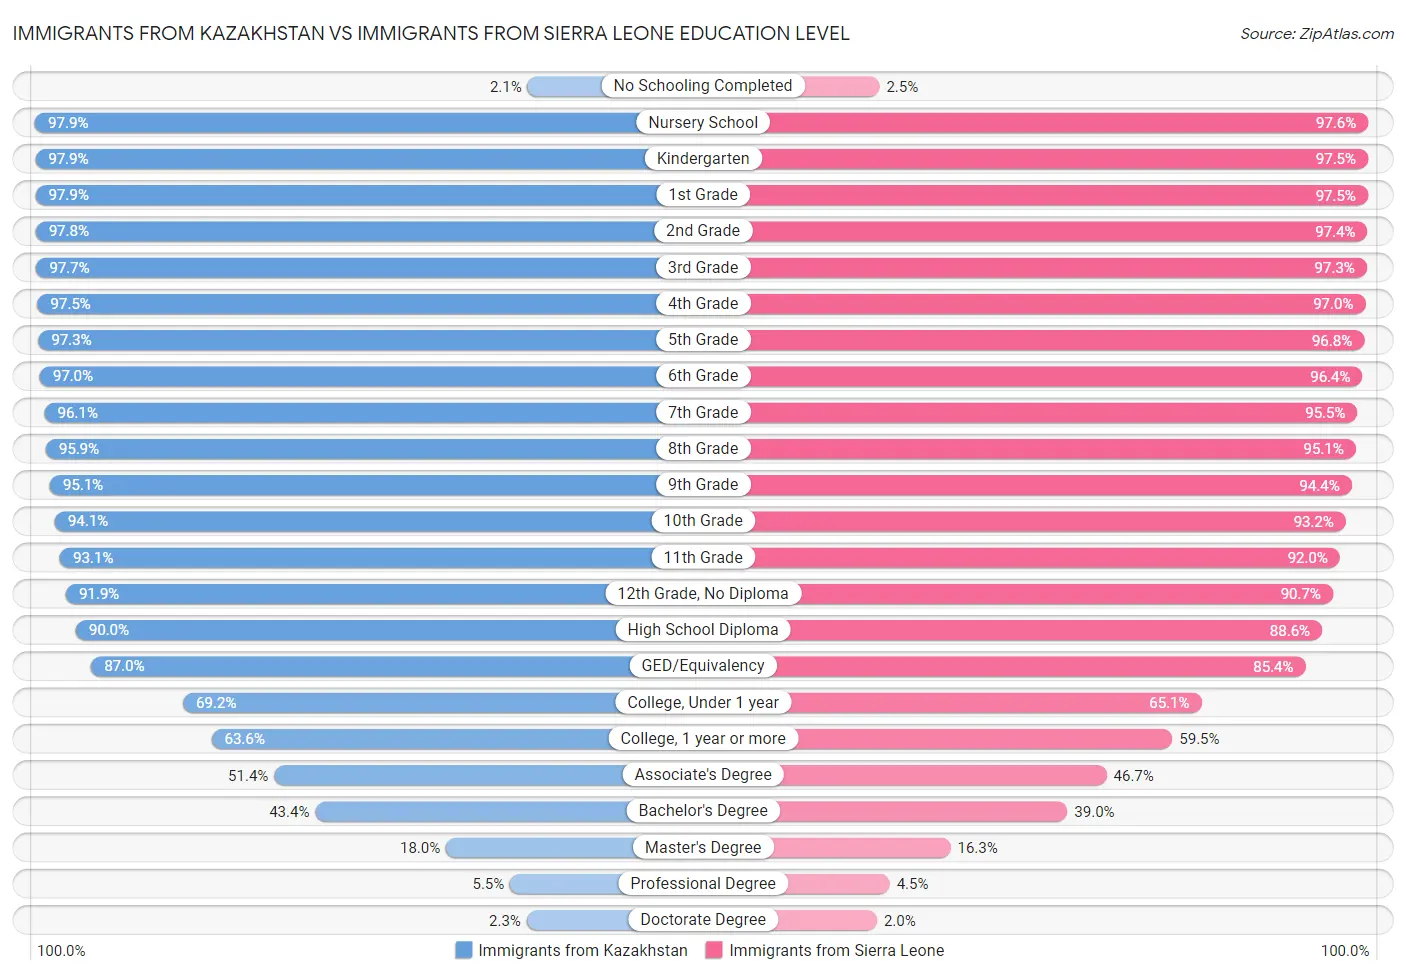 Immigrants from Kazakhstan vs Immigrants from Sierra Leone Education Level